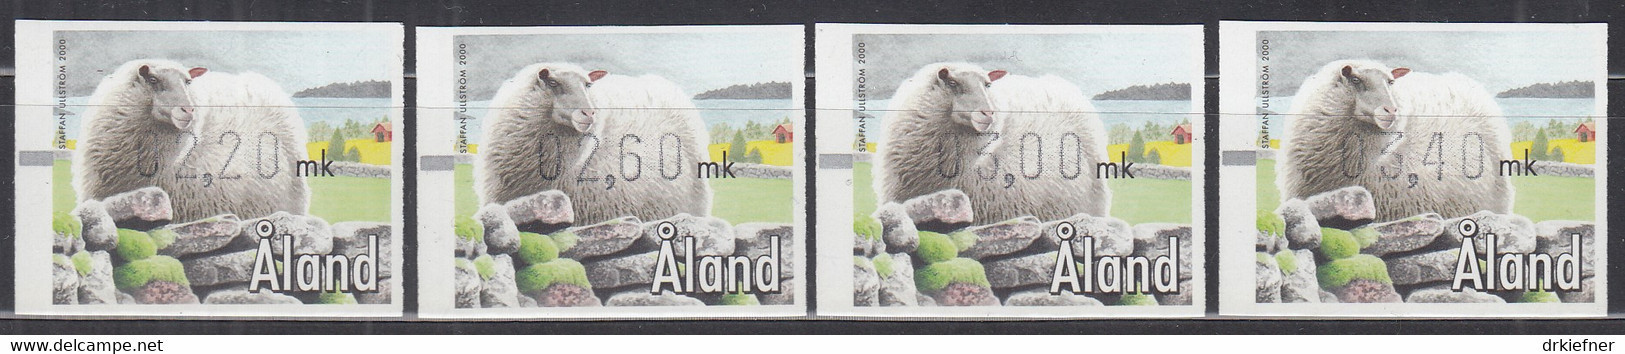 ALAND  Automatenmarke ATM 11 S1, Postfrisch **, 2000 - Ålandinseln